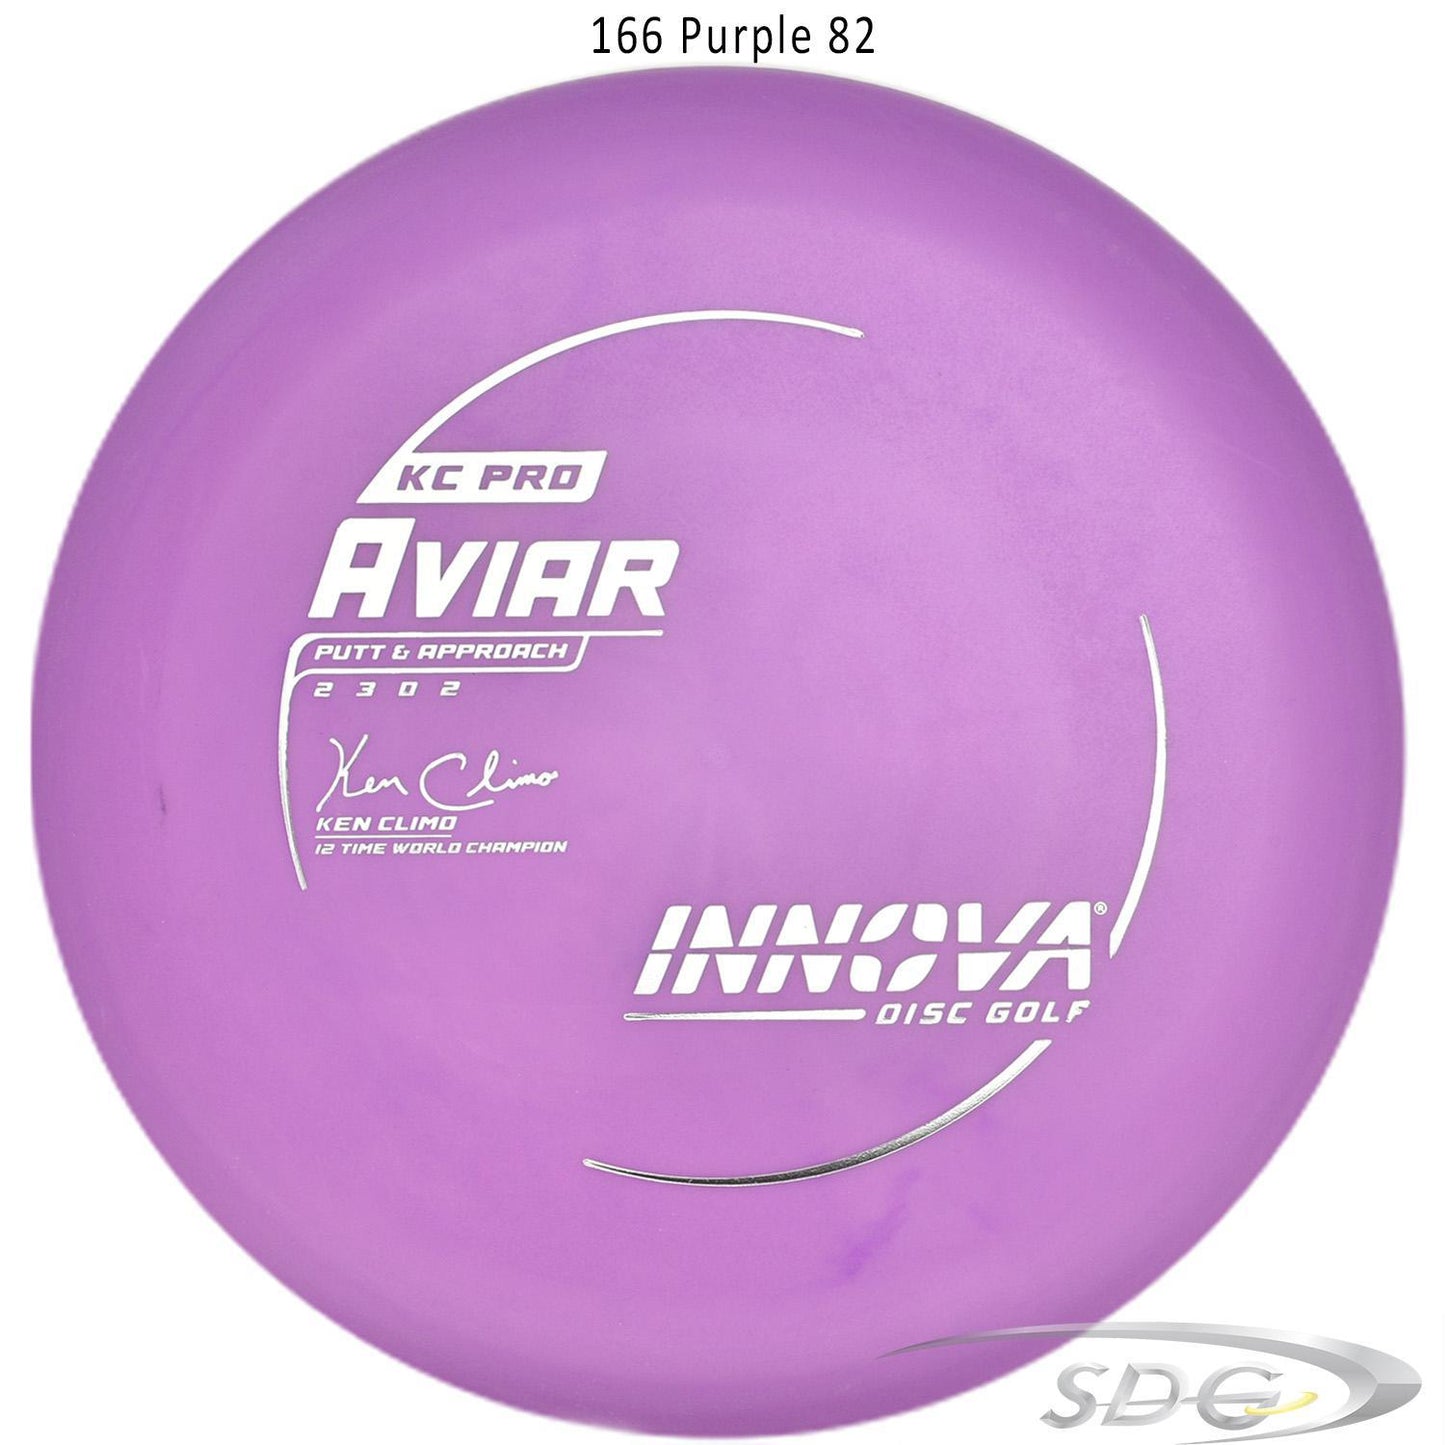 innova-kc-pro-aviar-disc-golf-putter 166 Purple 82 